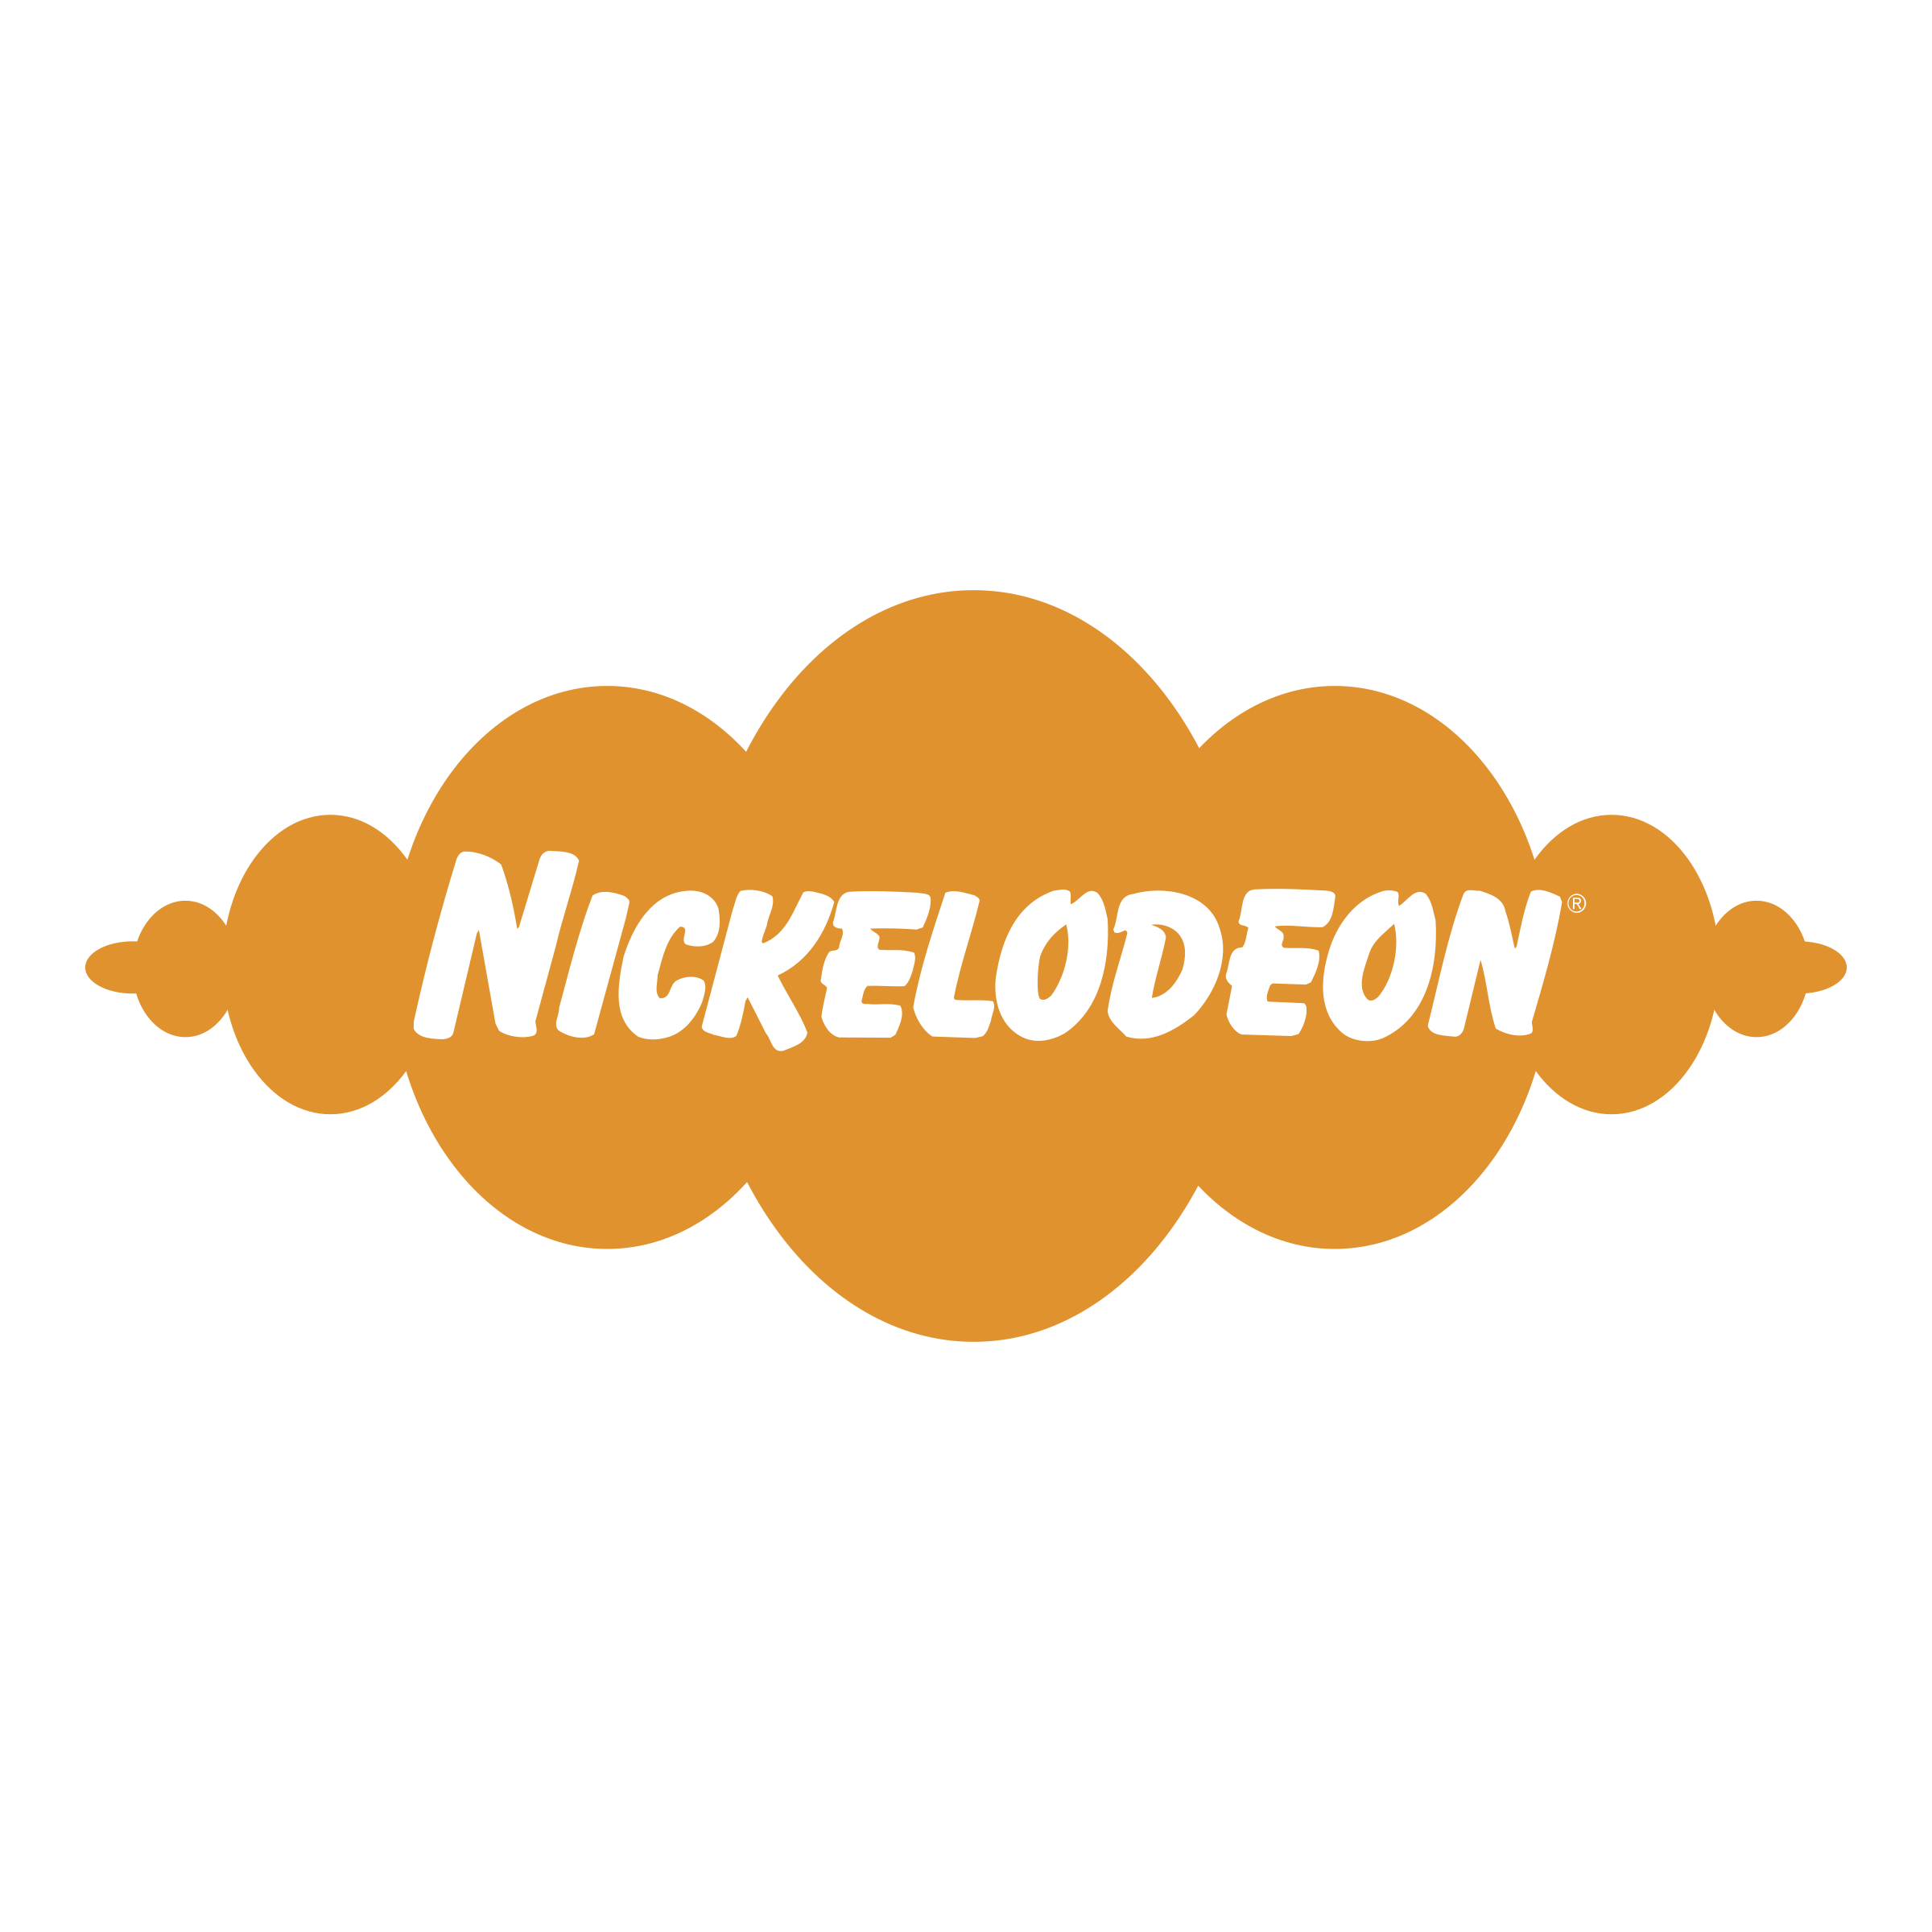 Телеканал никелодеон. Канал Nickelodeon. Никелодеон логотип. Надпись Nickelodeon. Старый логотип Никелодеон.